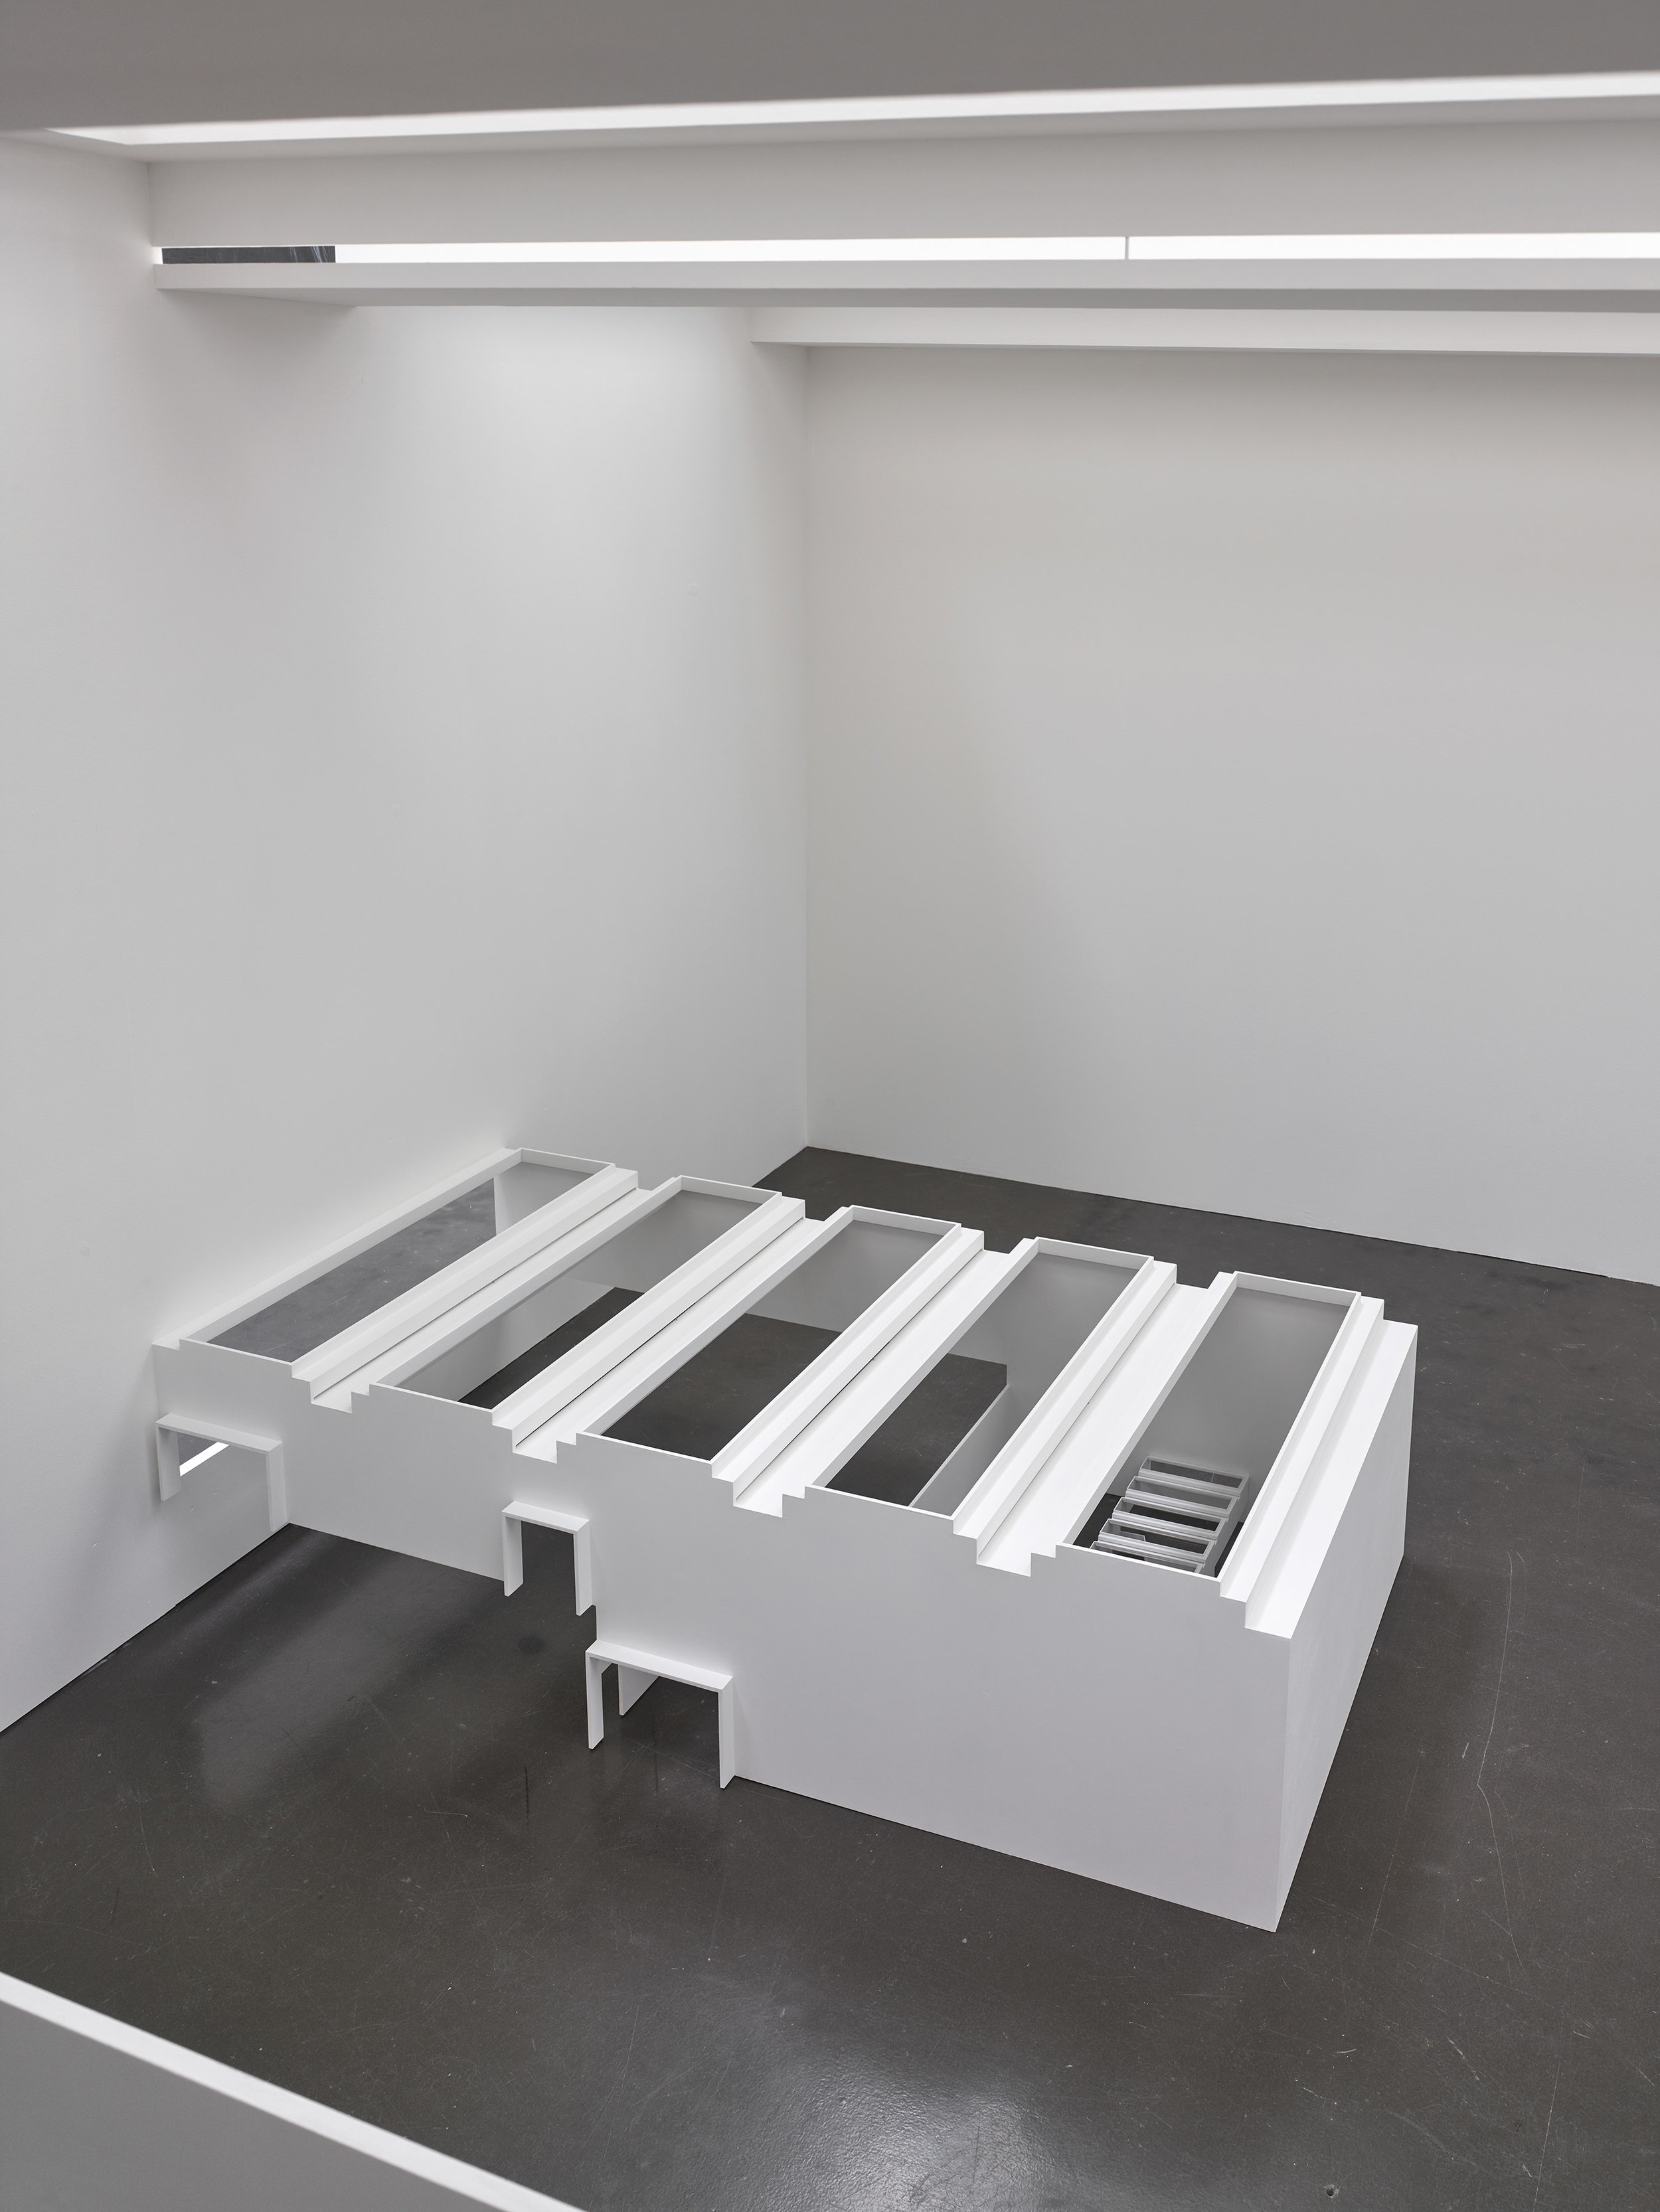  replica, 2019, installation view Kunsthalle Düsseldorf Photo: Achim Kukulies 